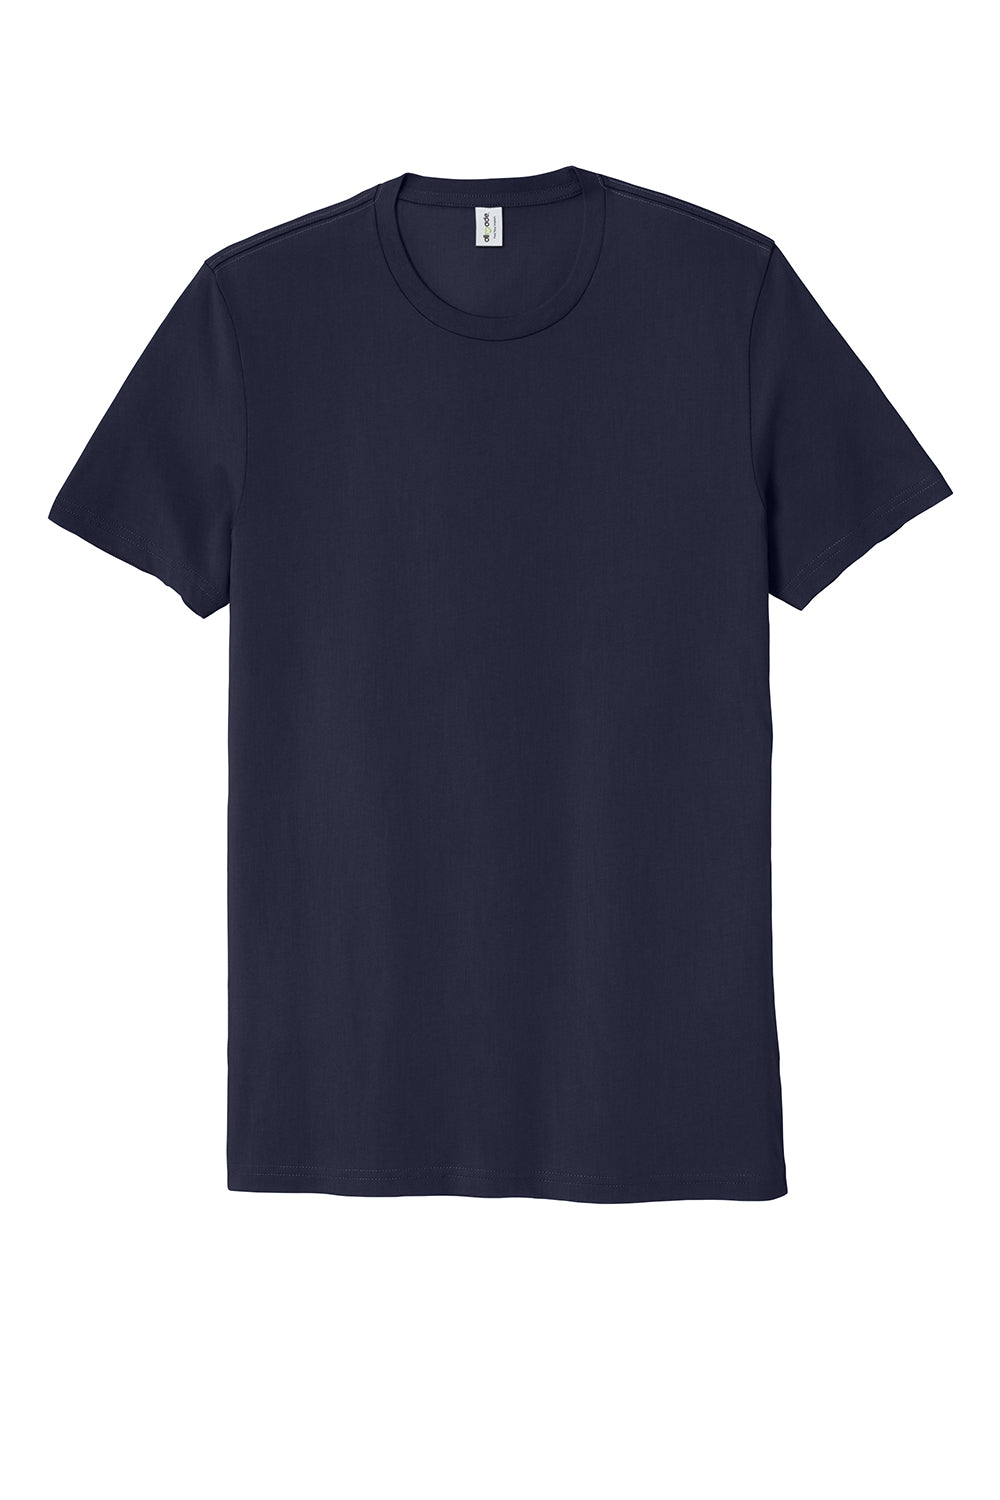 Allmade AL2100 Mens Organic Short Sleeve Crewneck T-Shirt Night Sky Navy Blue Flat Front